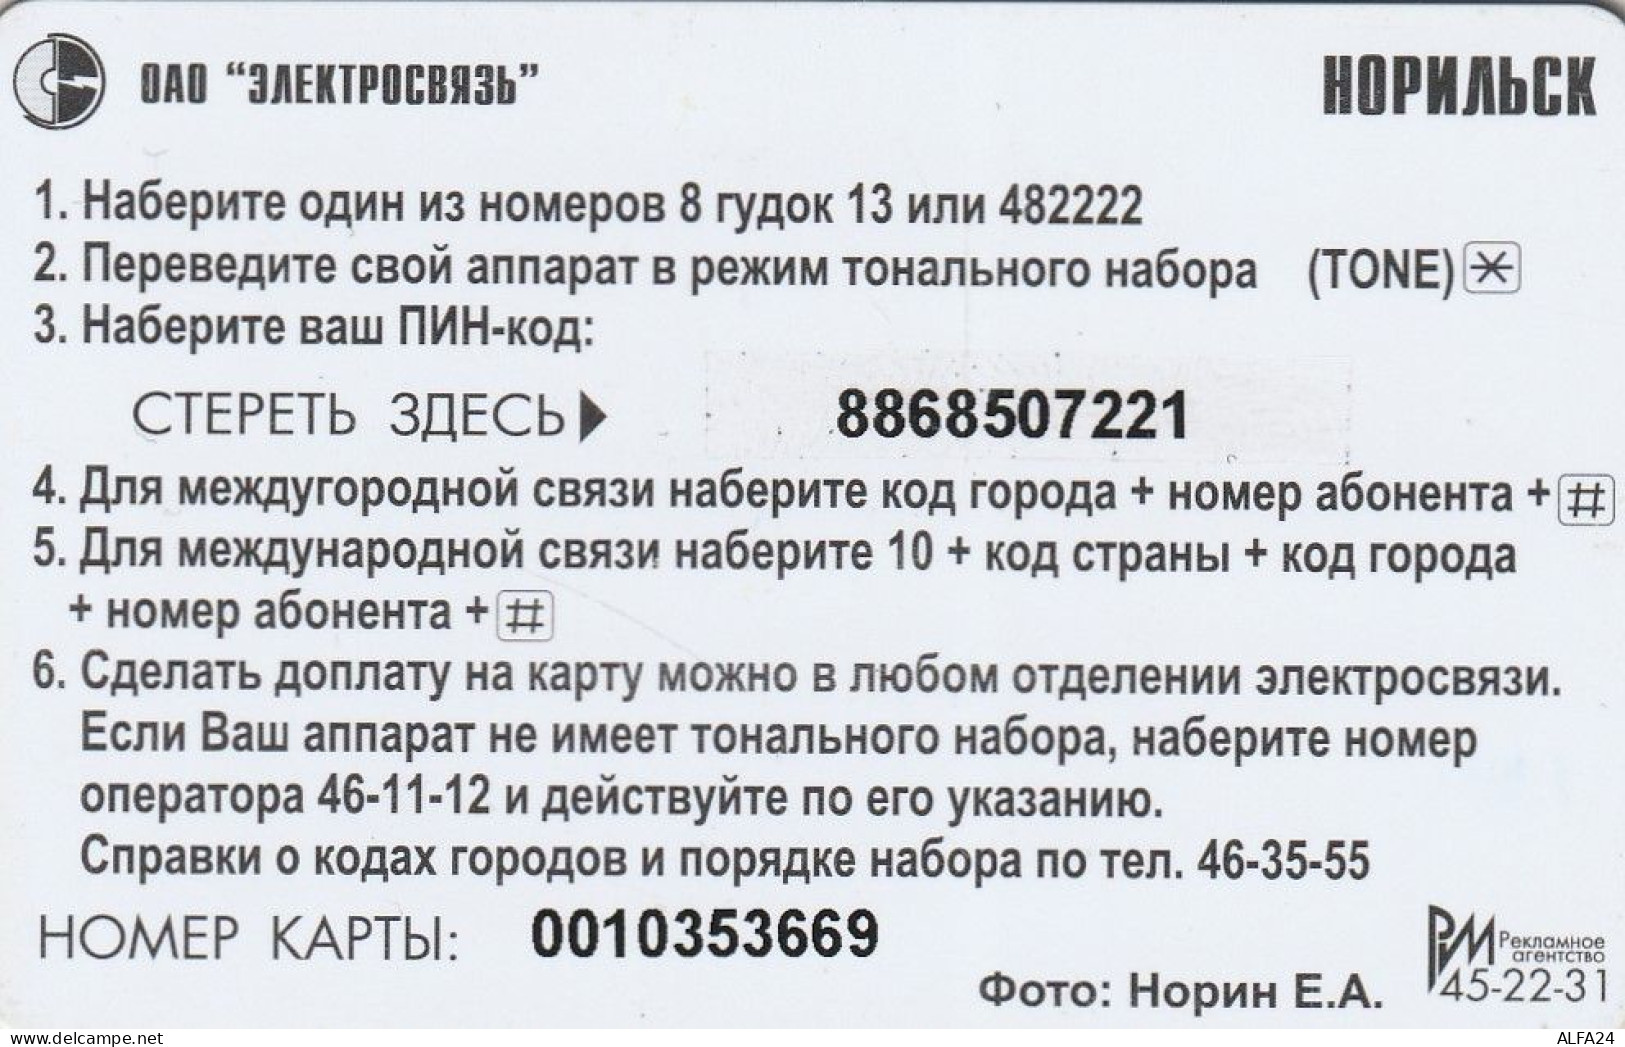 PREPAID PHONE CARD RUSSIA Sibirtelecom - Norilsk, Krasnoyarsk Region CTK (CZ369 - Russia